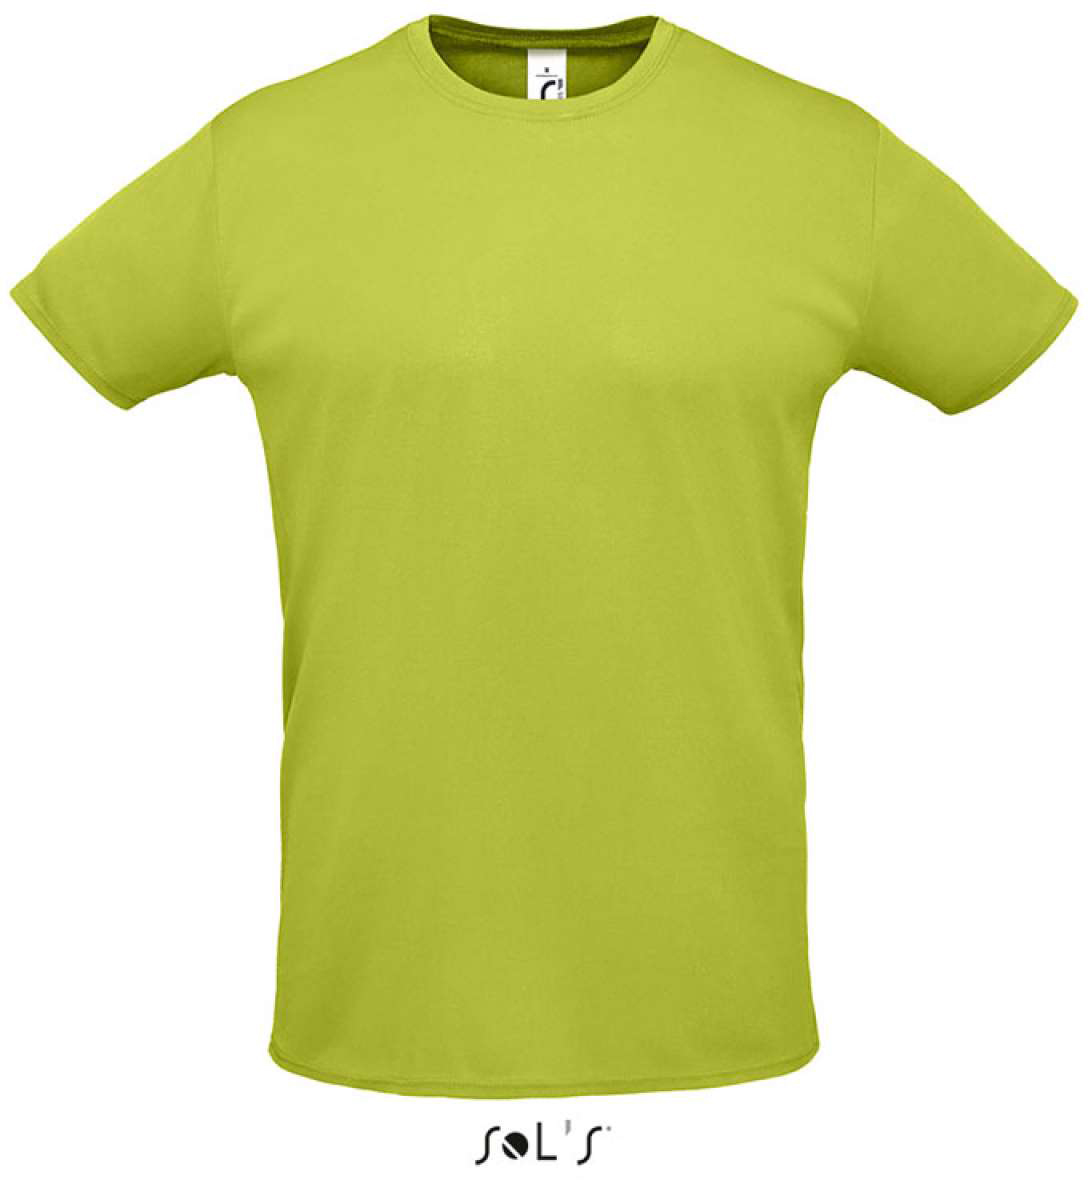 Sol's Sprint - Unisex Sport T-shirt - Sol's Sprint - Unisex Sport T-shirt - Kiwi